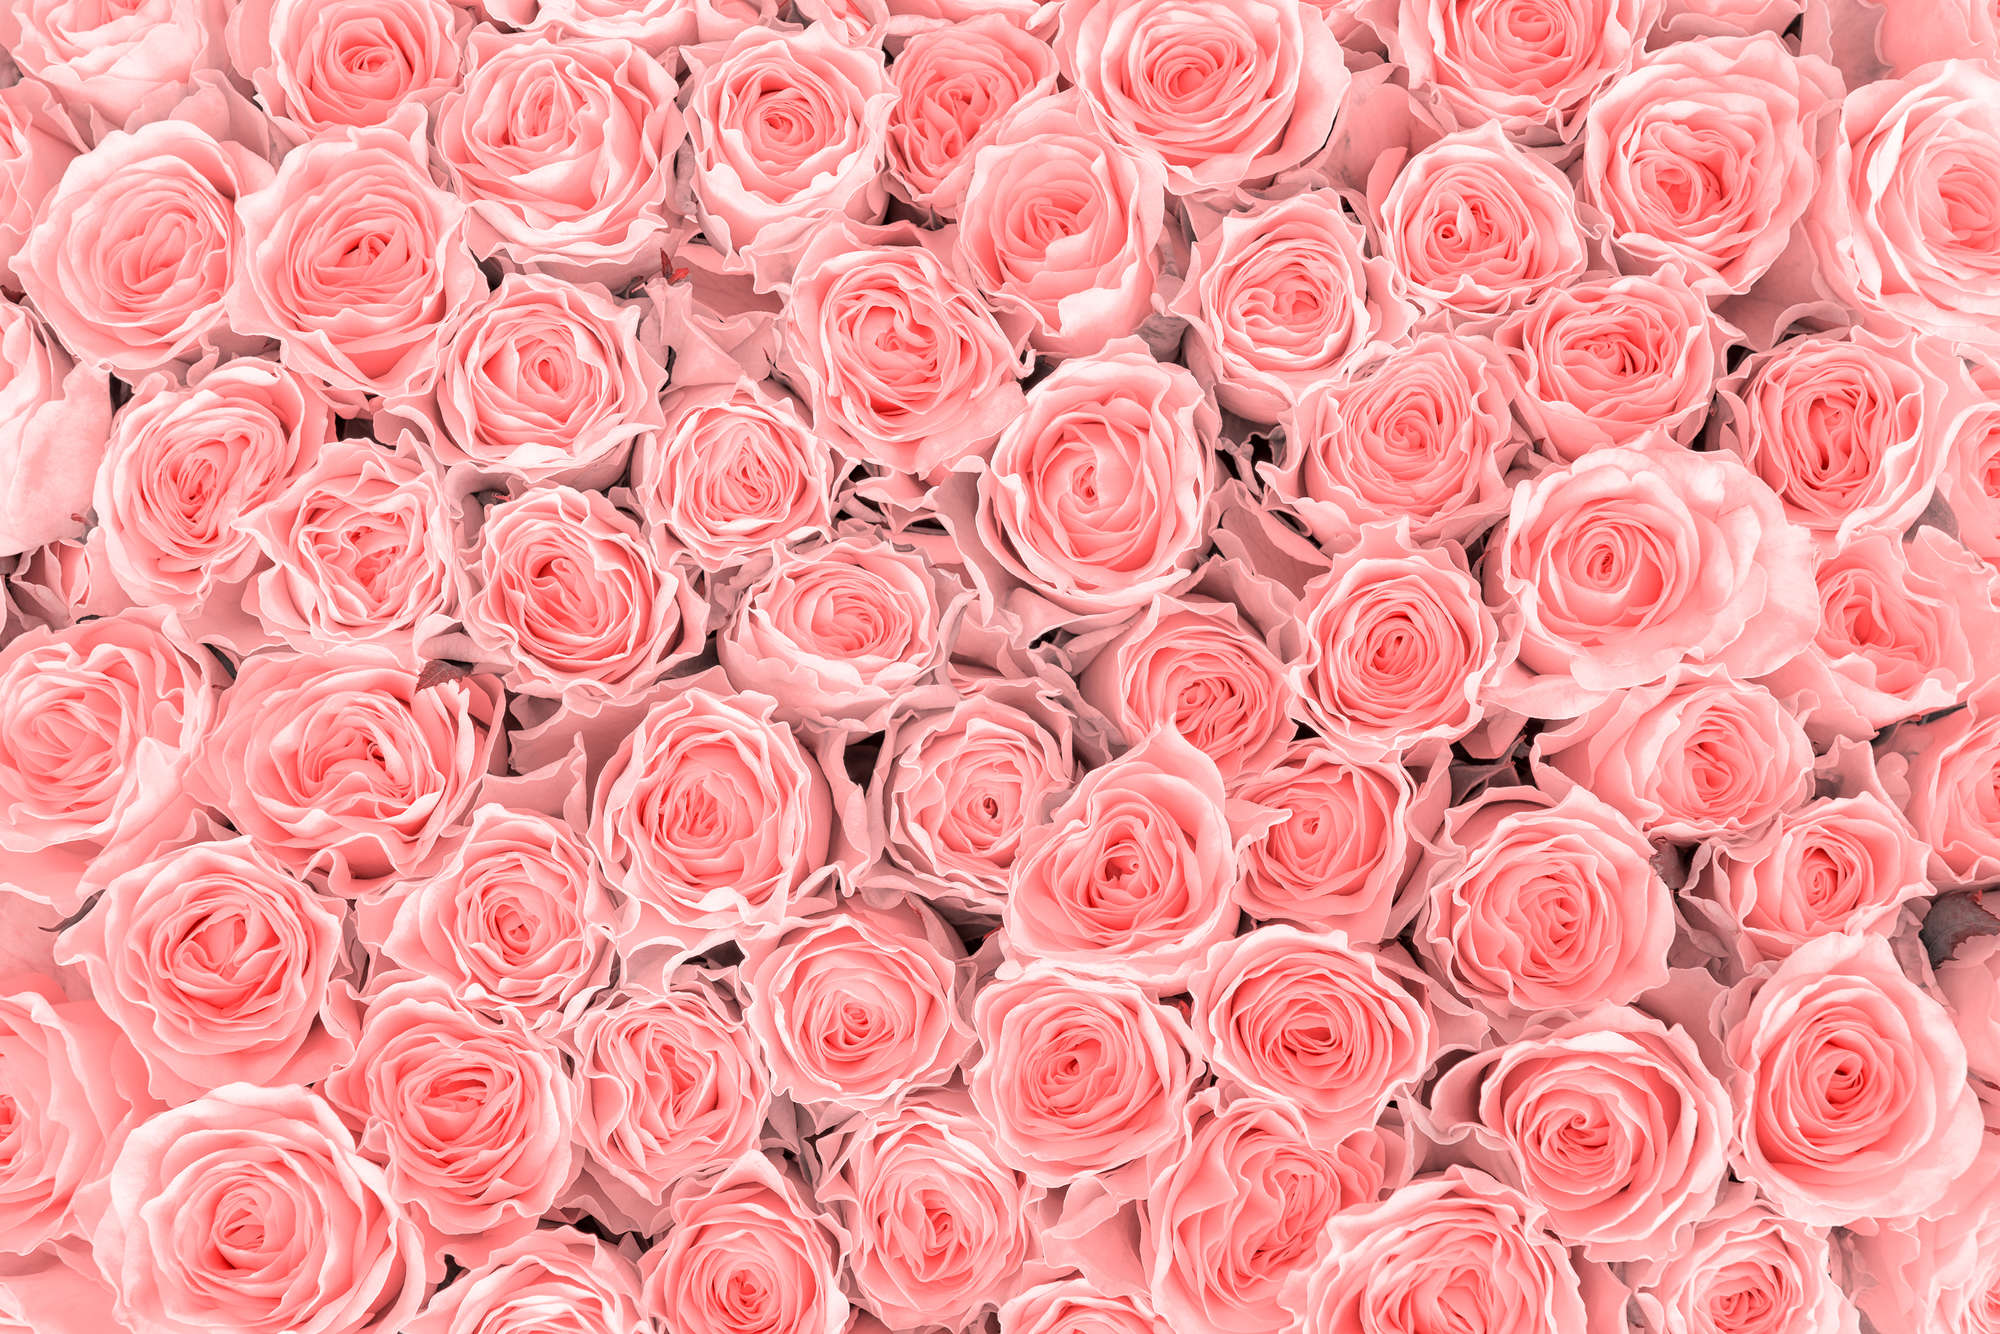             Planten muurschildering roze rozen op matte gladde fleece
        